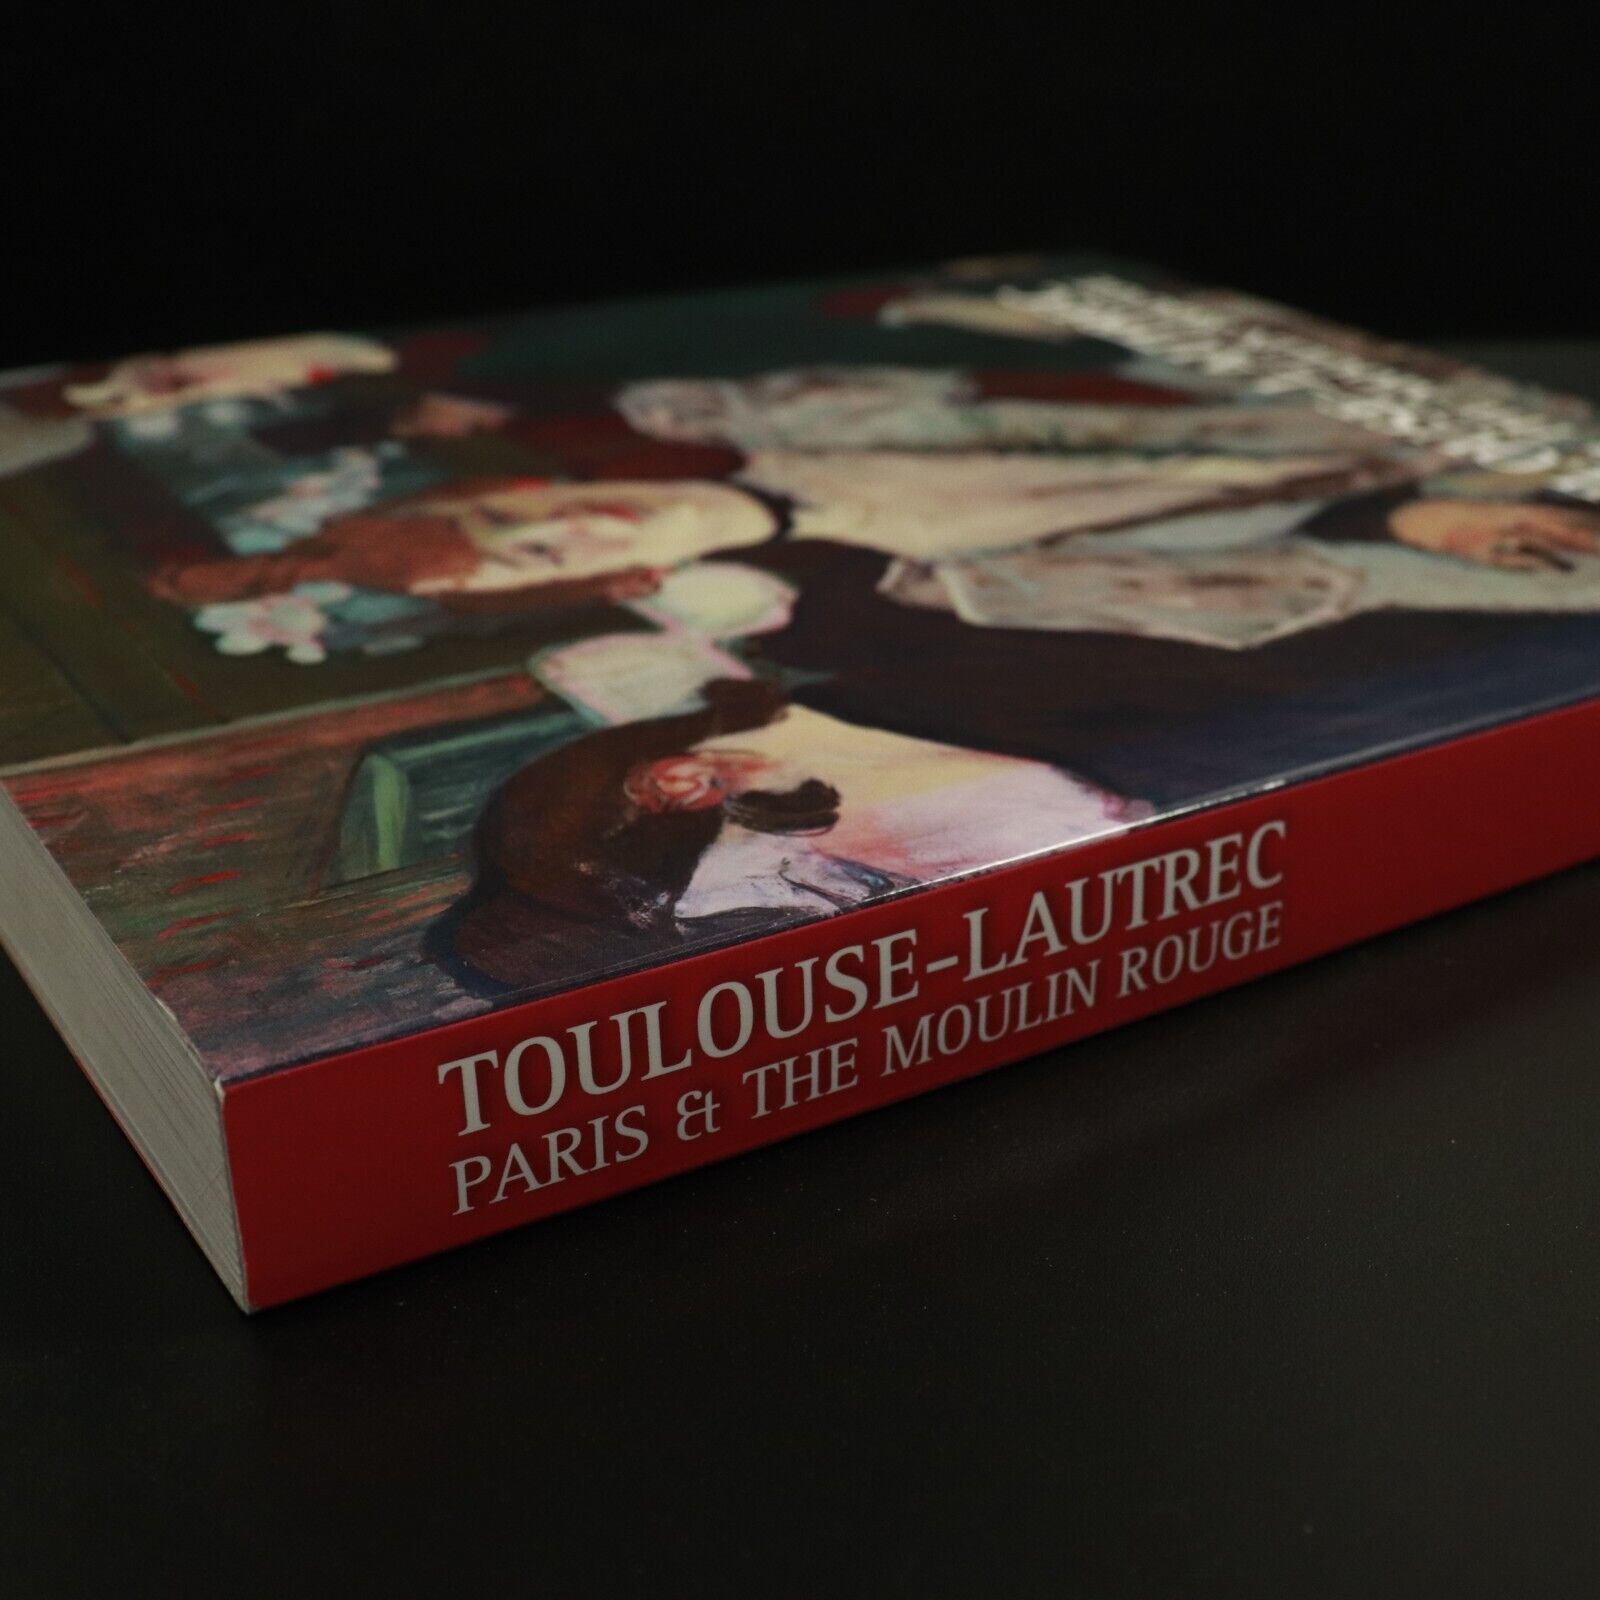 2012 Toulouse-Lautrec Paris & The Moulin Rouge Art History Book National Gallery